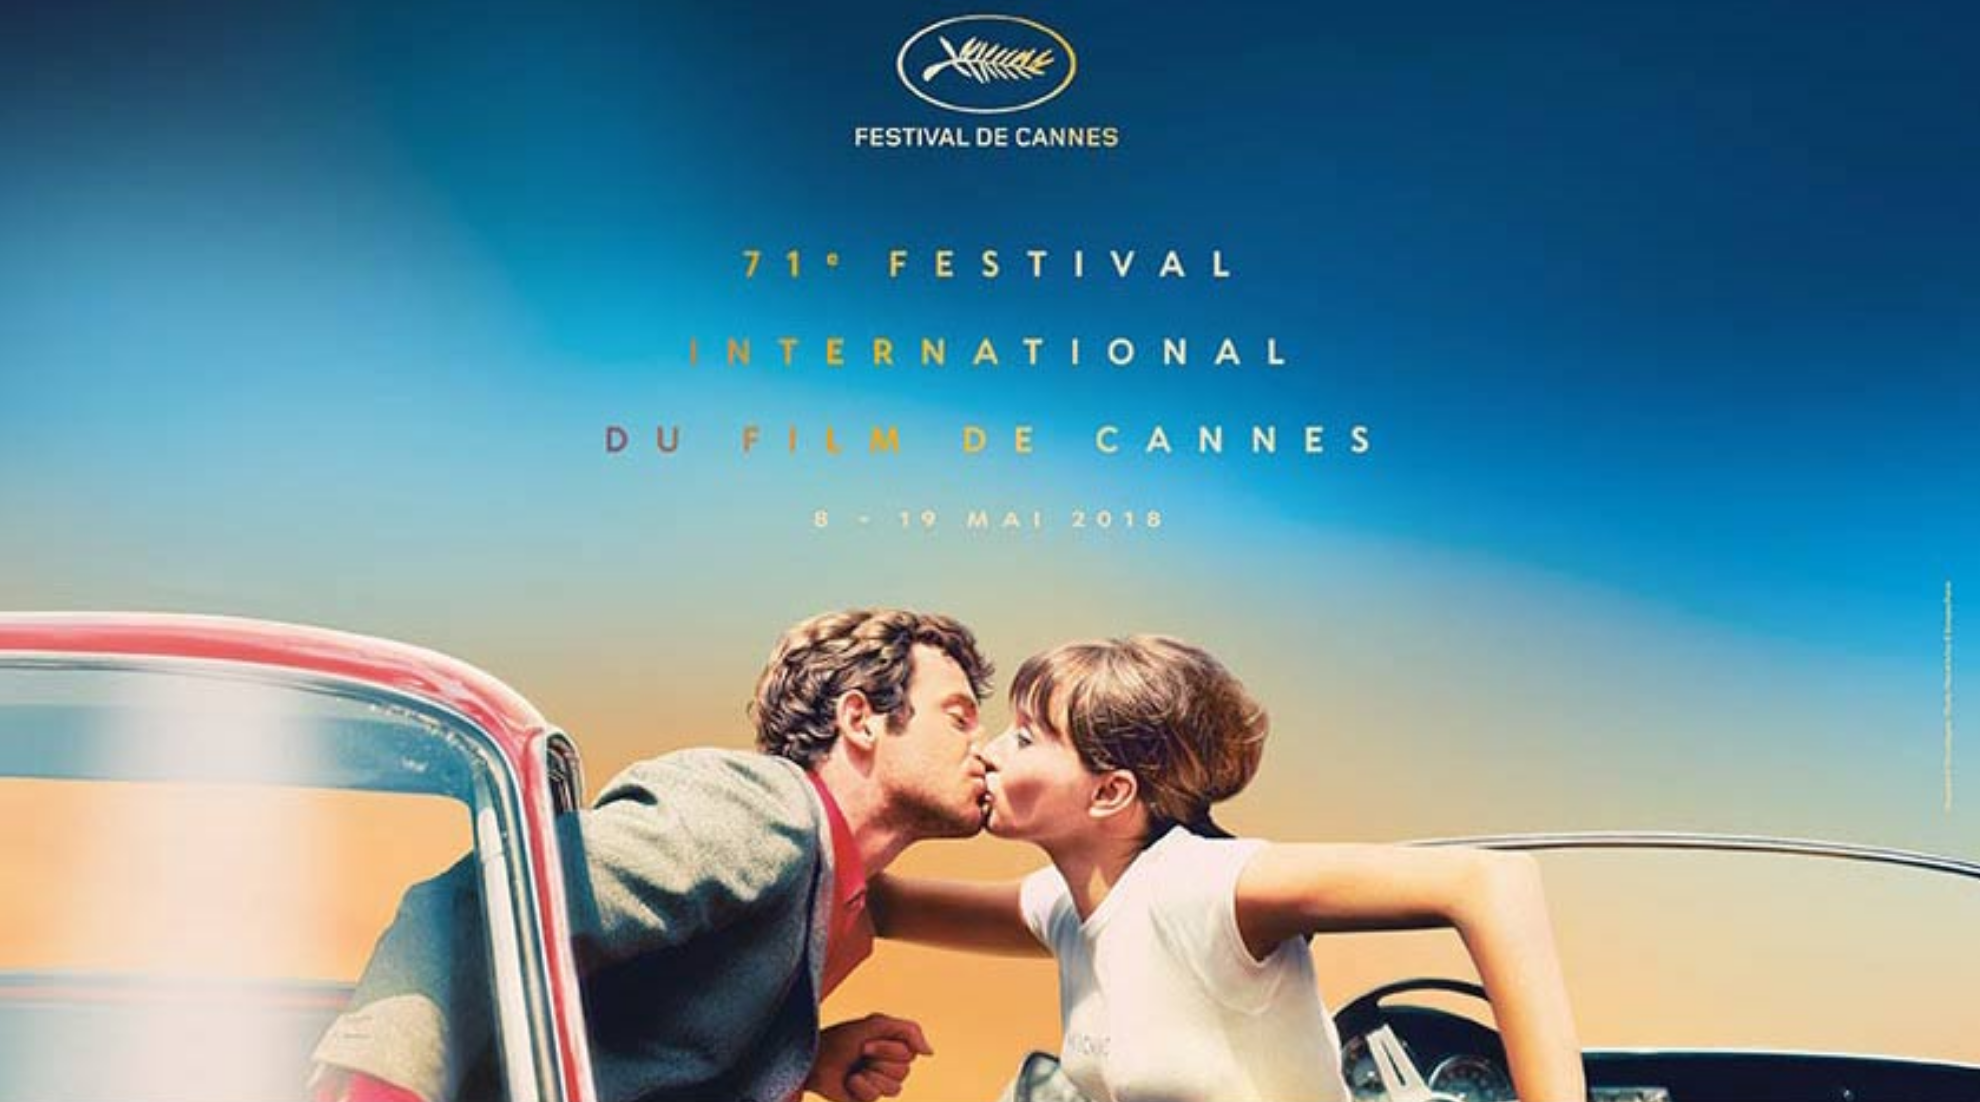 Radio France au Festival de Cannes du 8 au 19 mai 2018